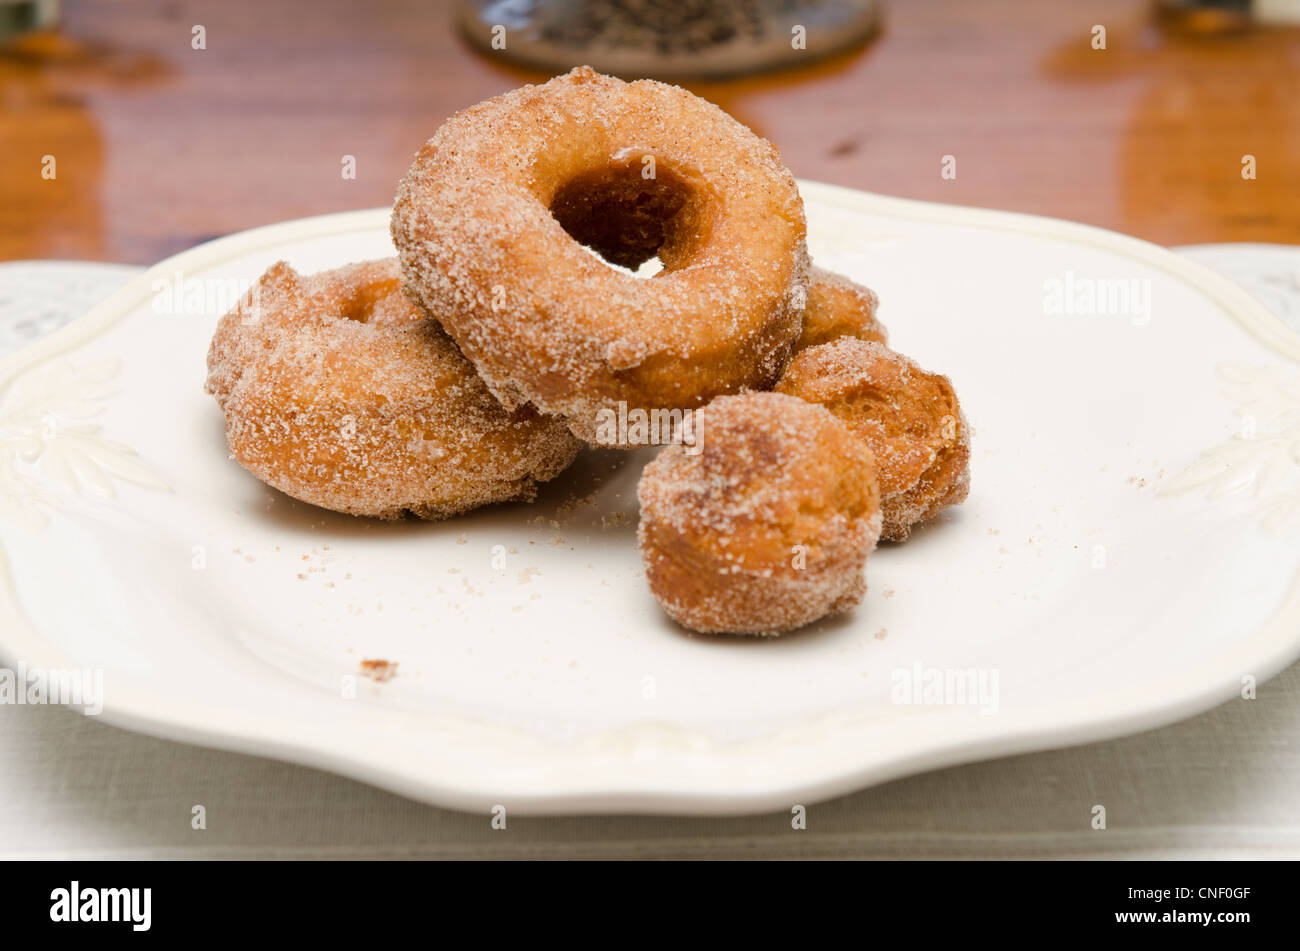 Homemade fried doughnuts & doughnut holes on a white plate. Stock Photo